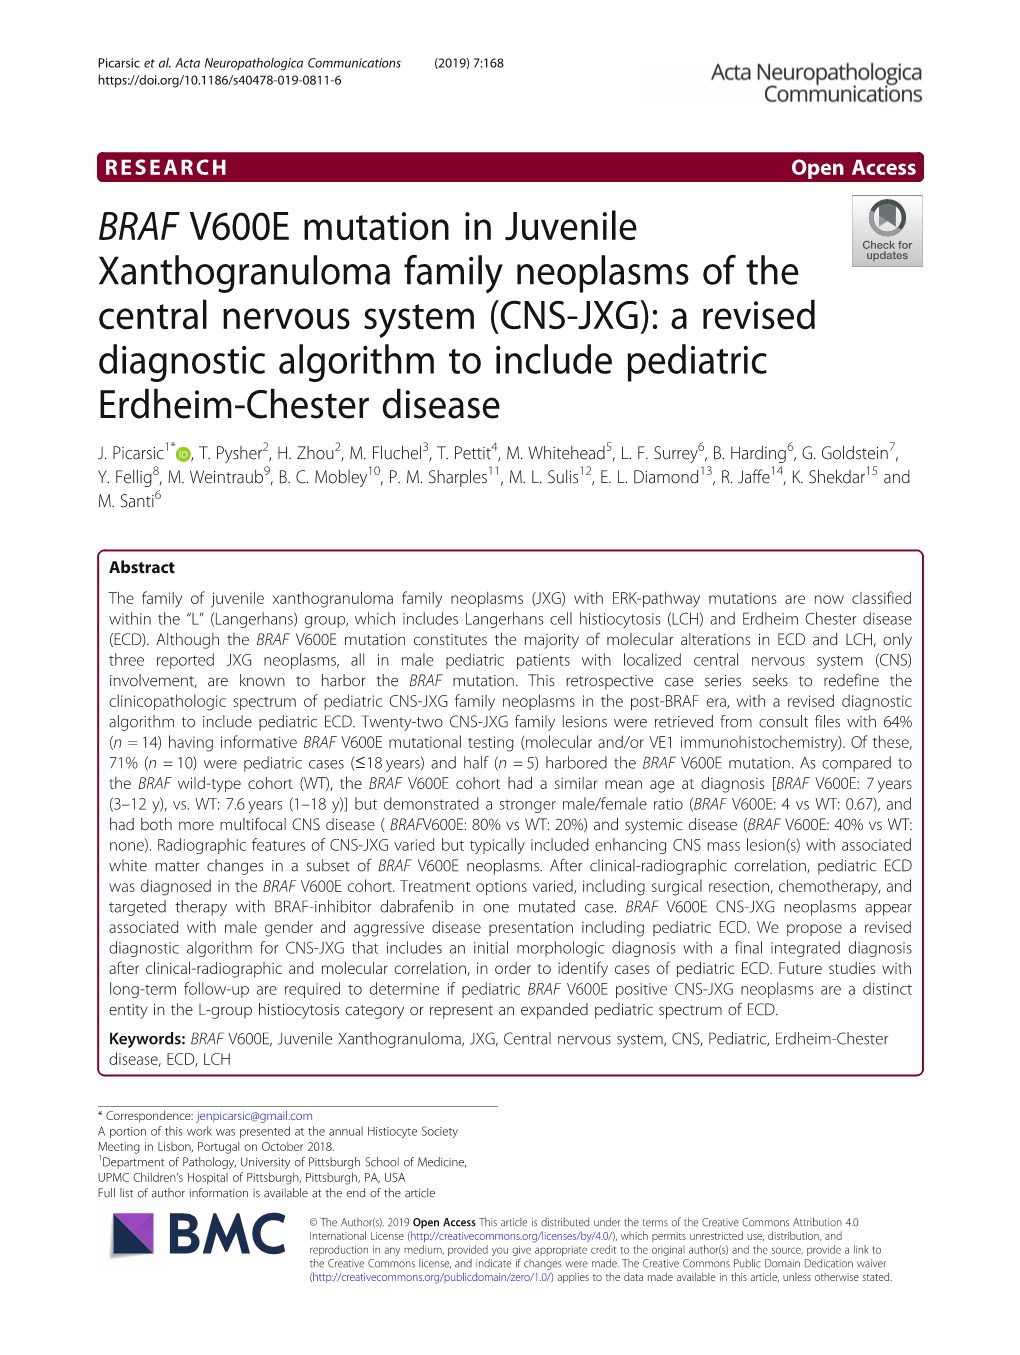 CNS-JXG): a Revised Diagnostic Algorithm to Include Pediatric Erdheim-Chester Disease J